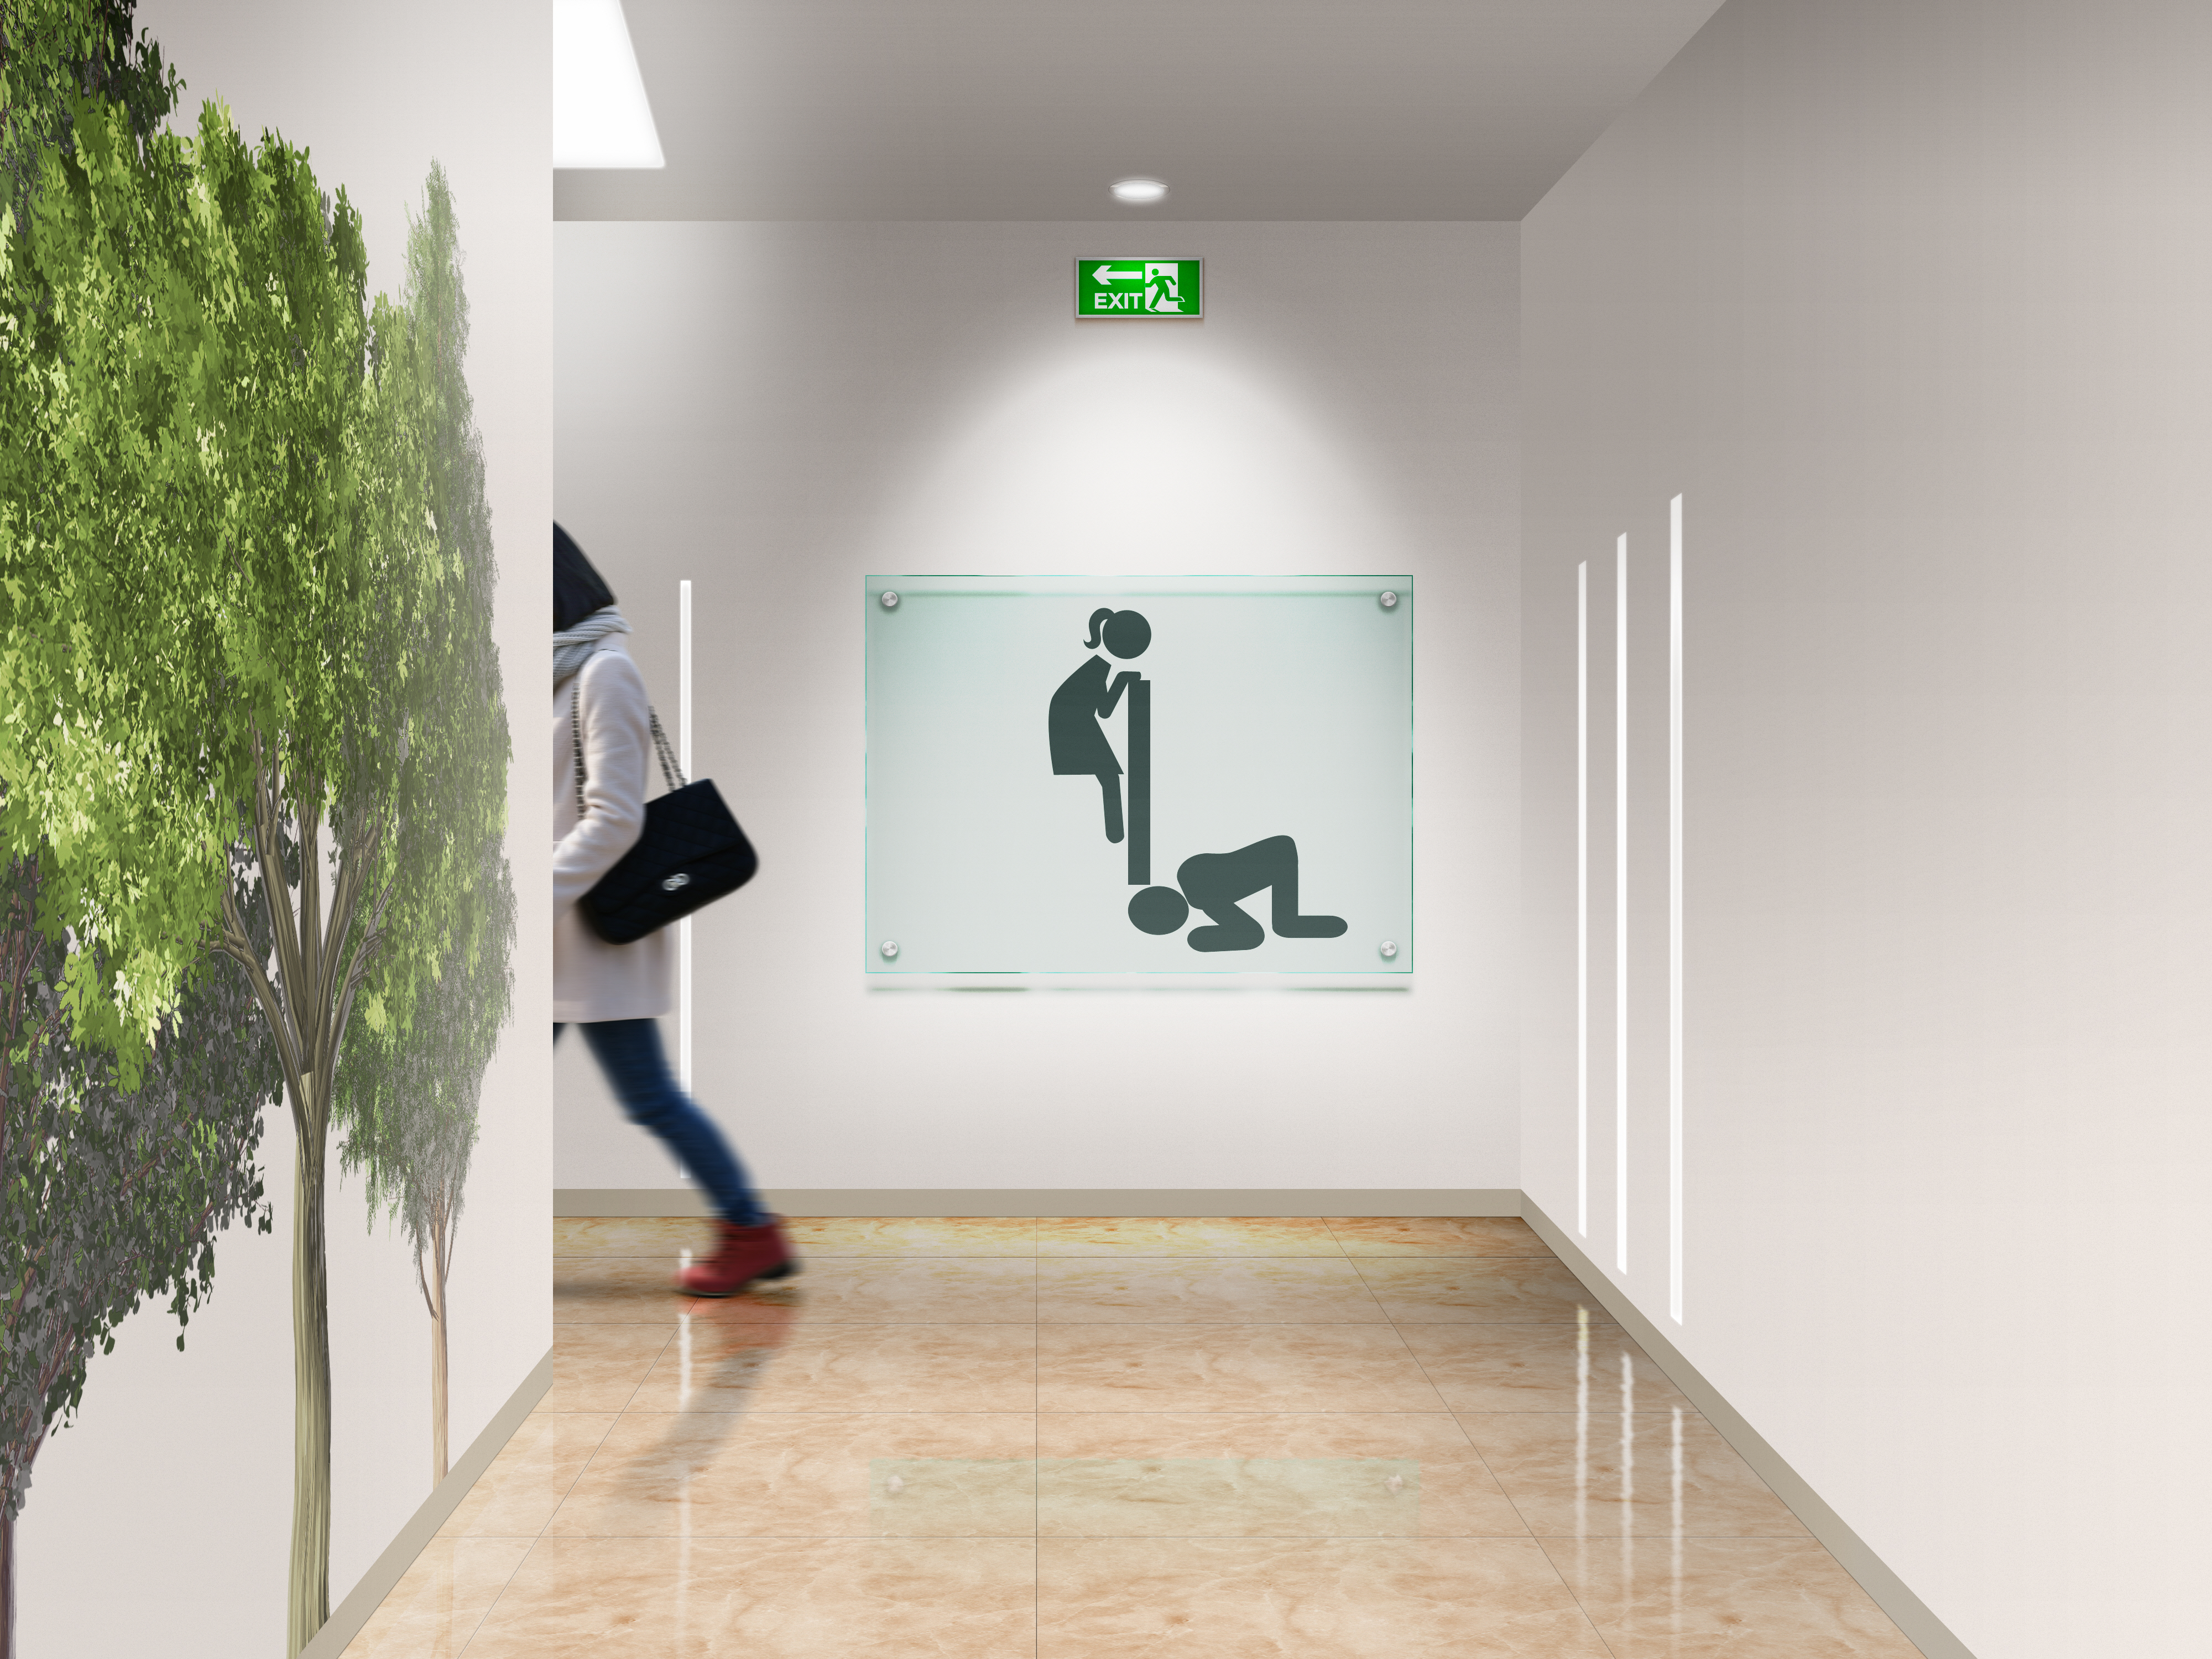 Public Restroom Signs Digital Art 4000x3000